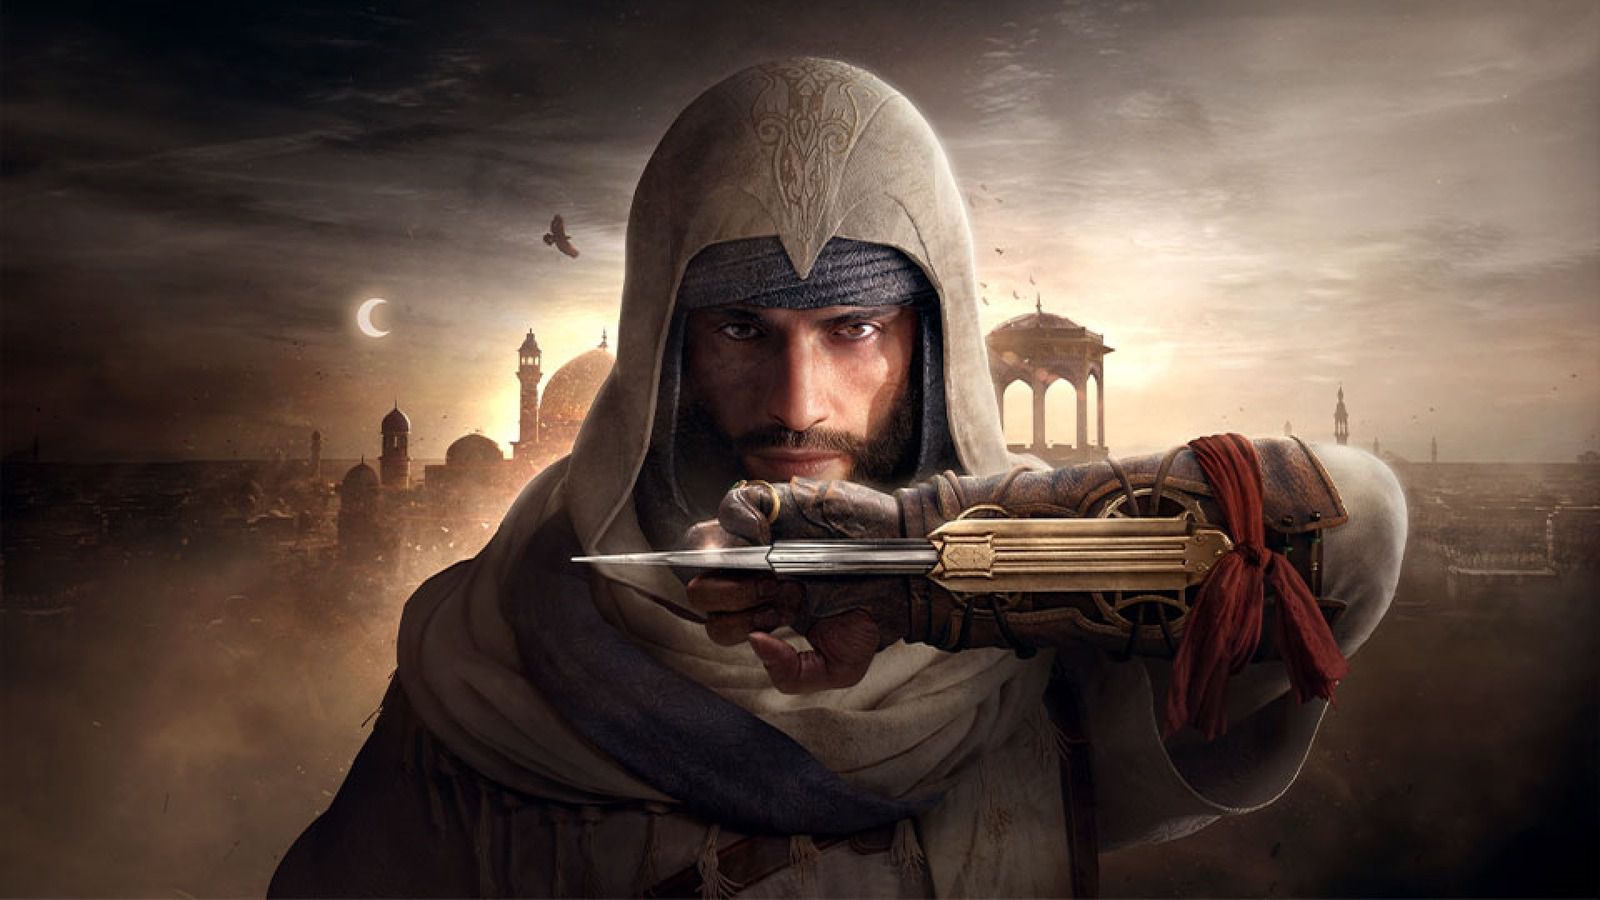 Jogo Assassin's Creed Mirage, PS4